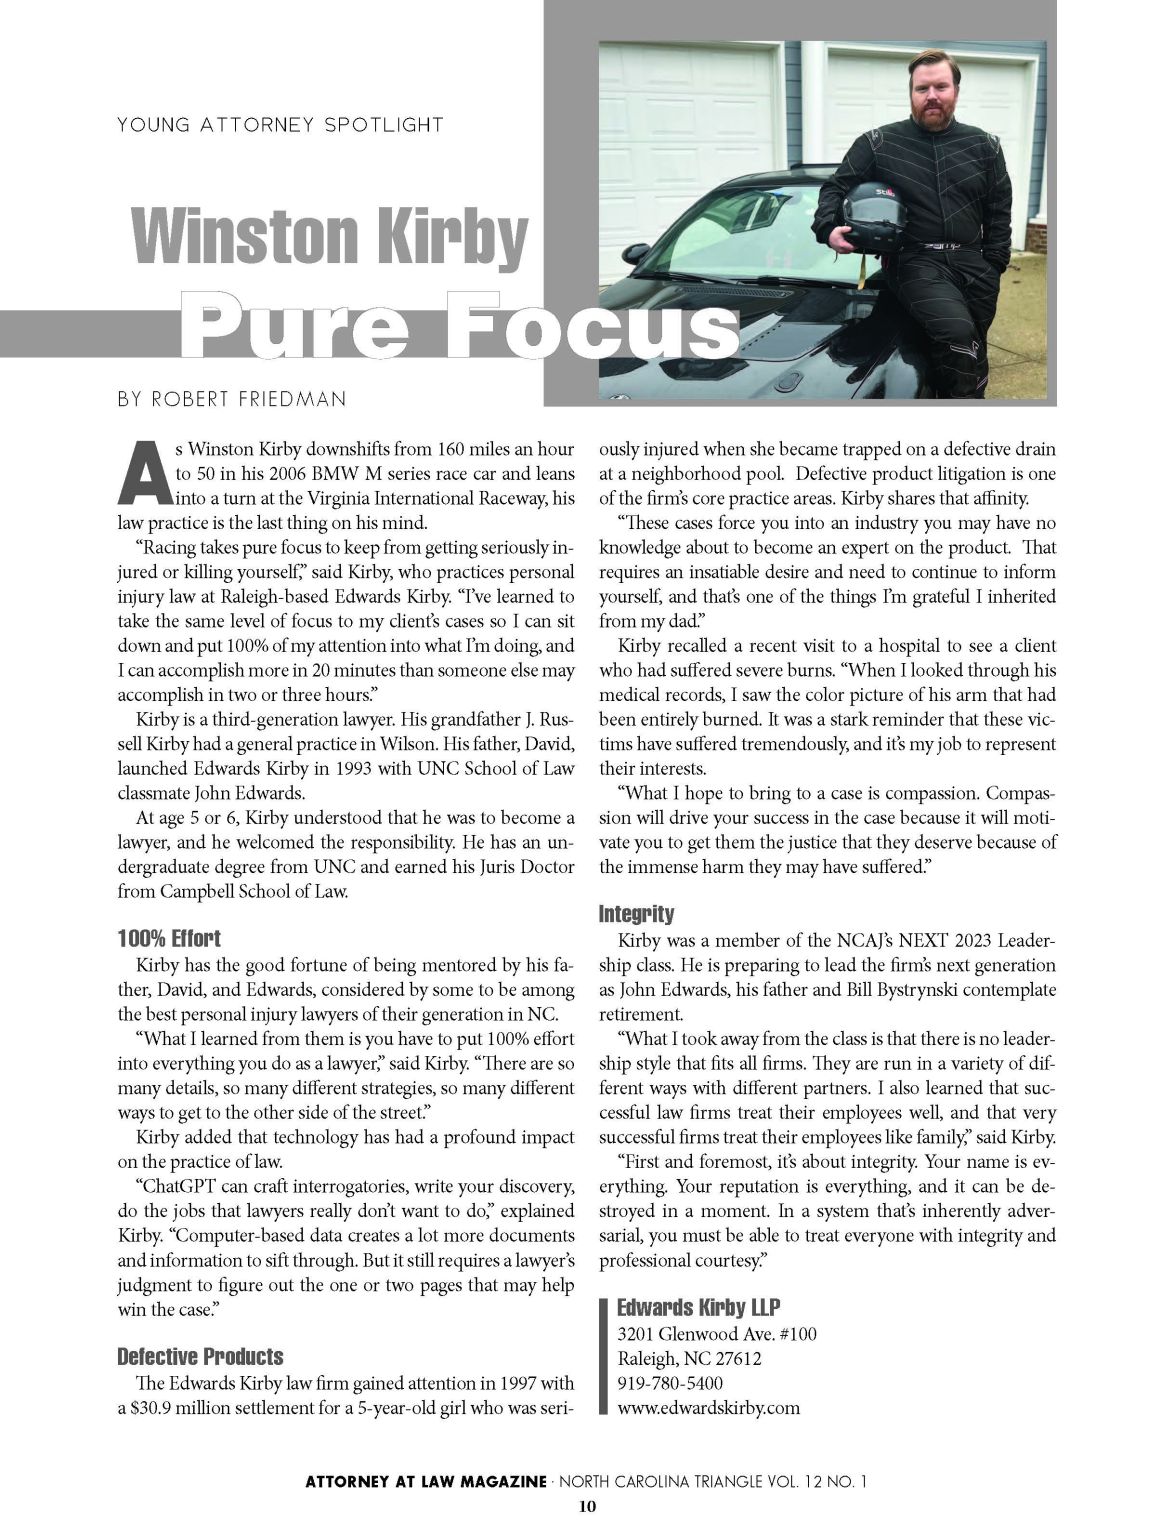 Robert Friedman on LinkedIn: Personal injury attorney Winston Kirby ...